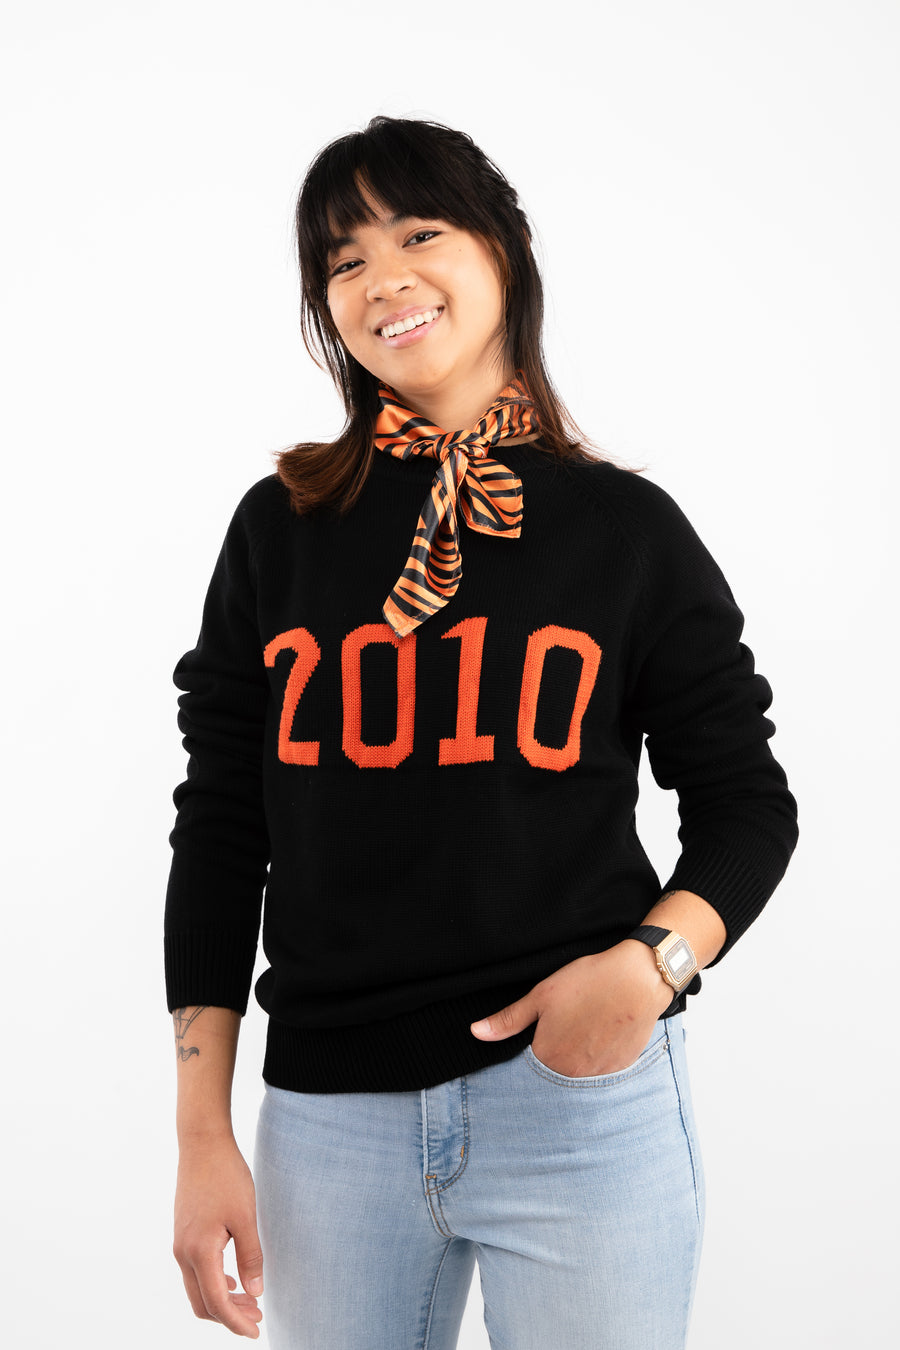 2010 Varsity Sweater